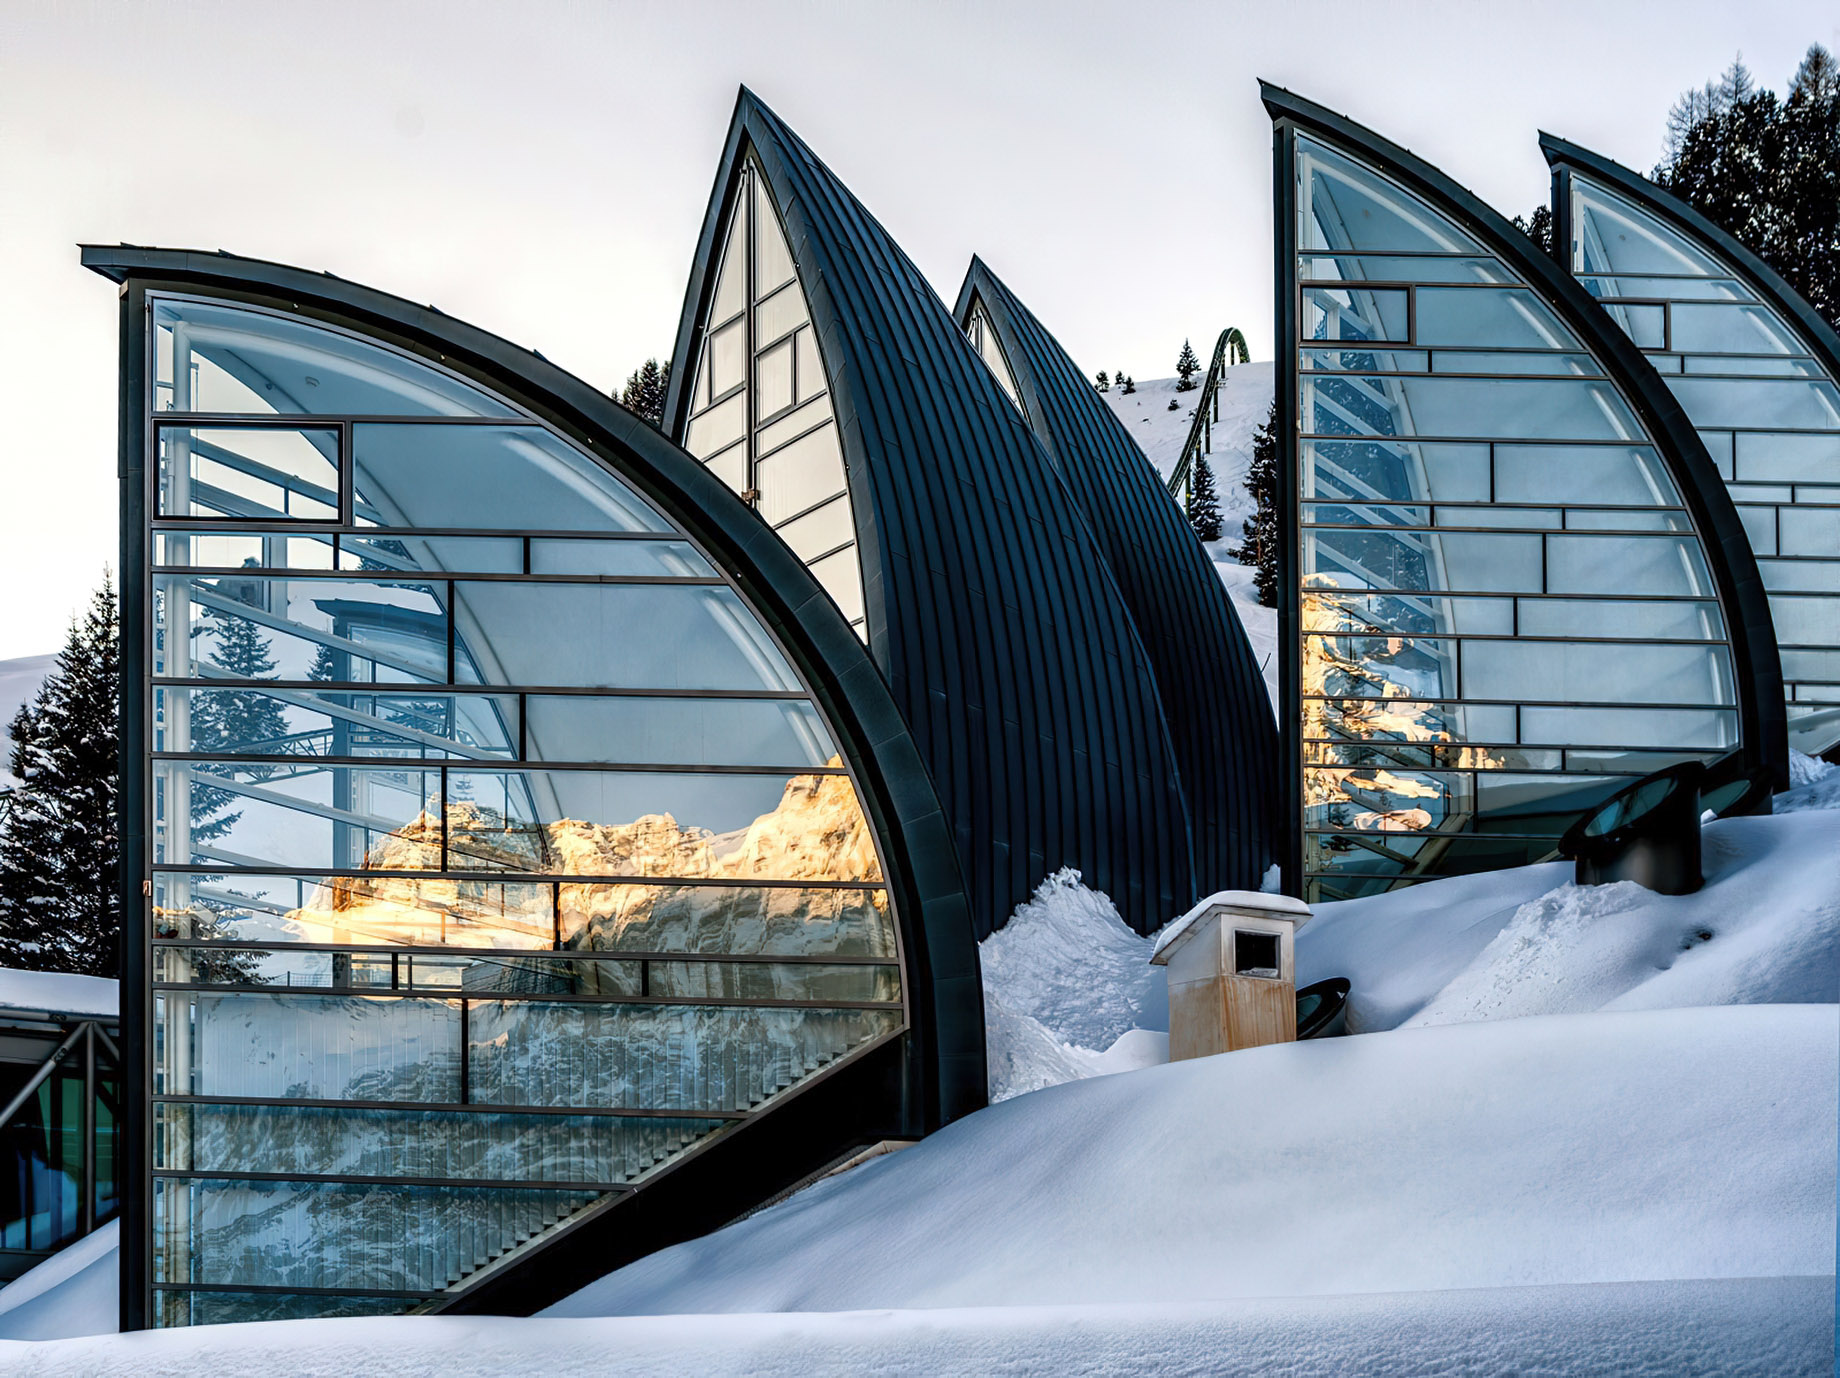 Tschuggen Grand Hotel – Arosa, Switzerland – Reflections